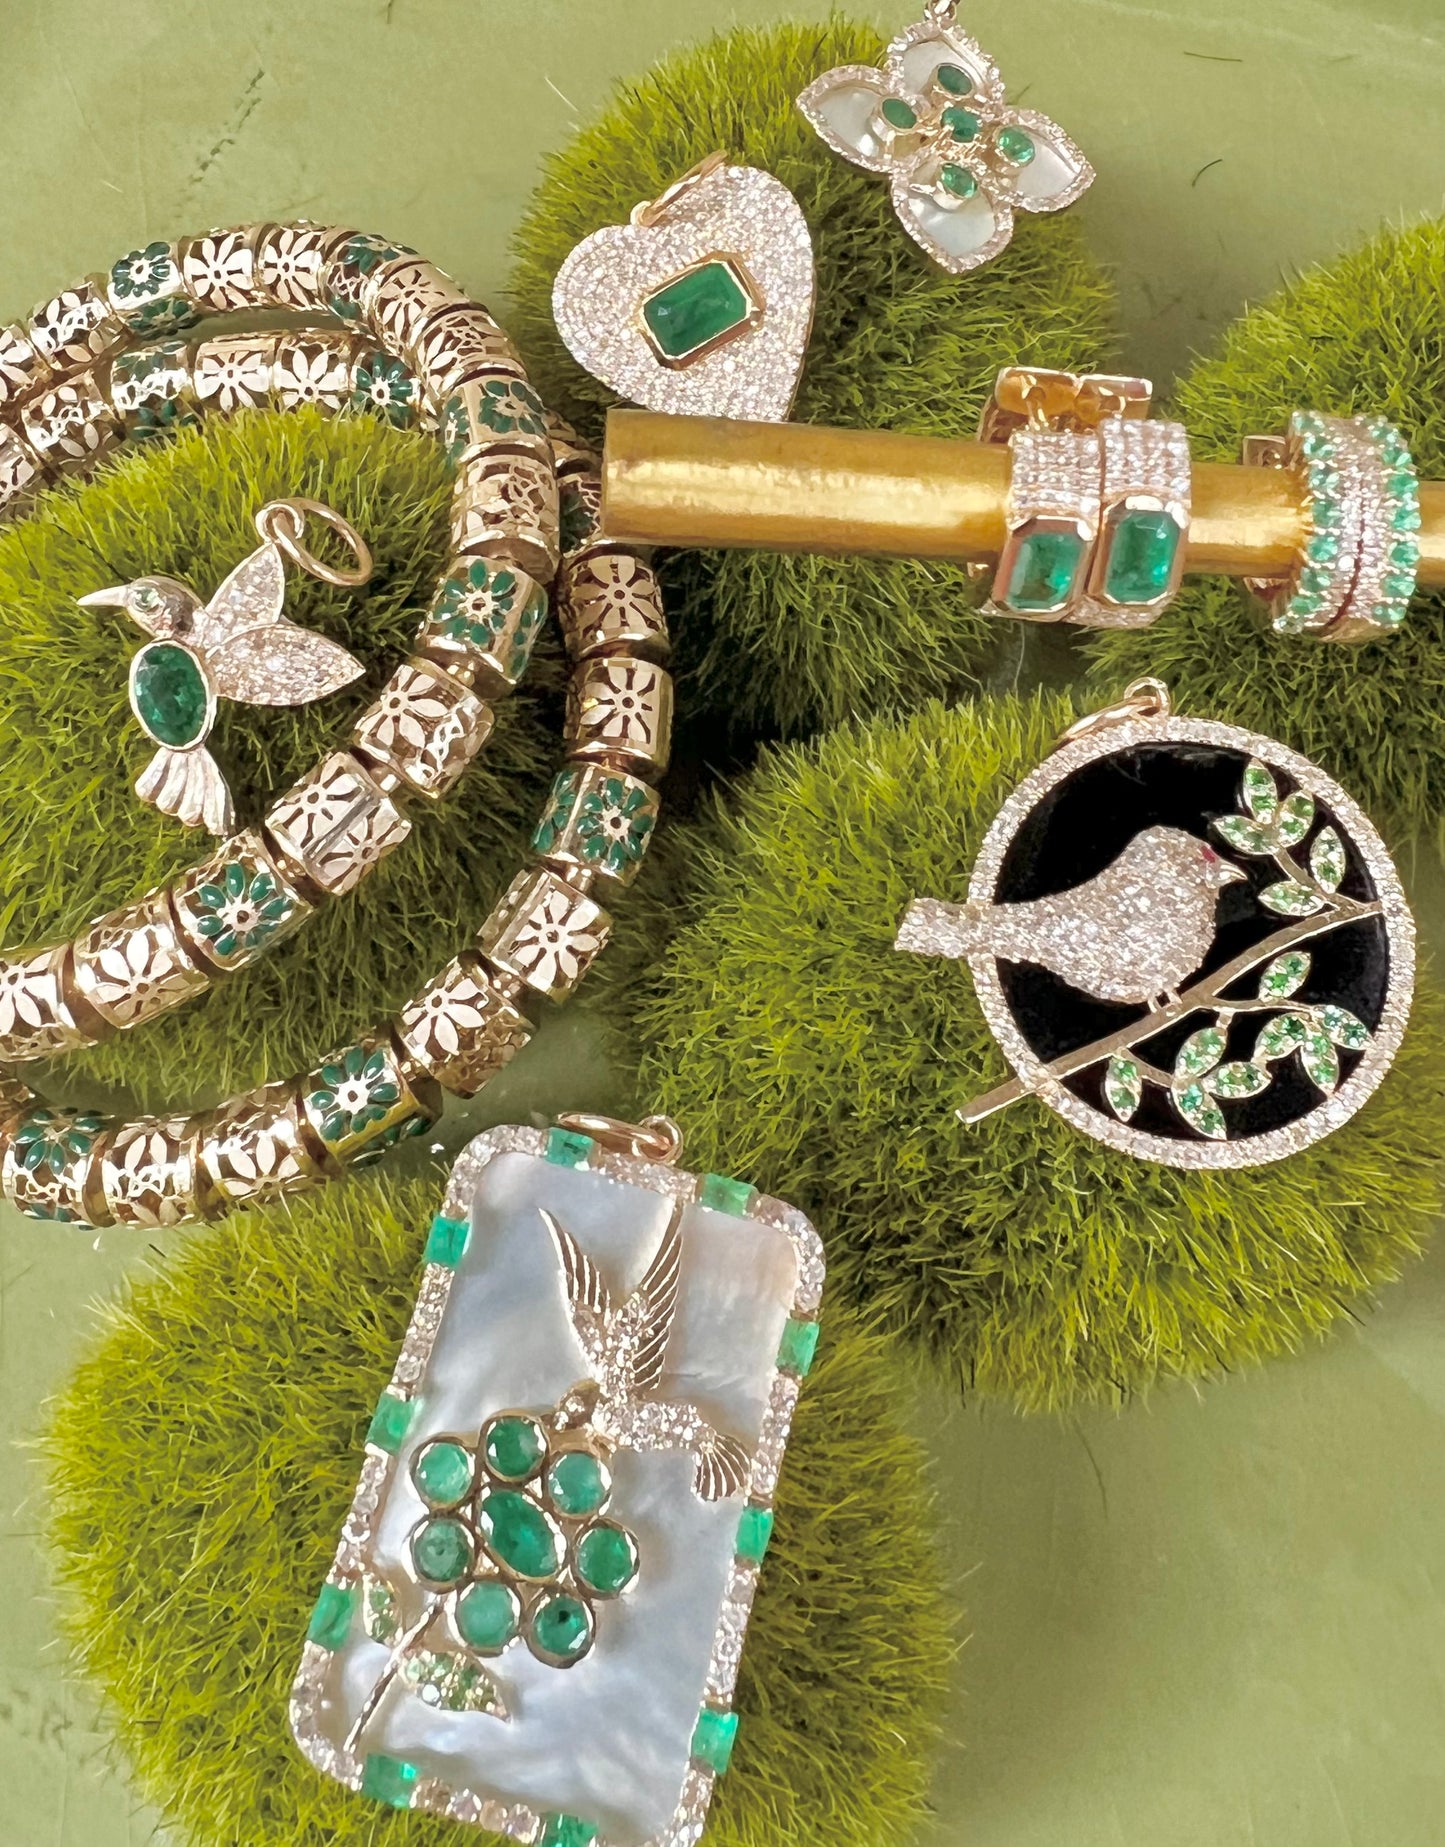 Gold, diamond and emerald hummingbird pendant